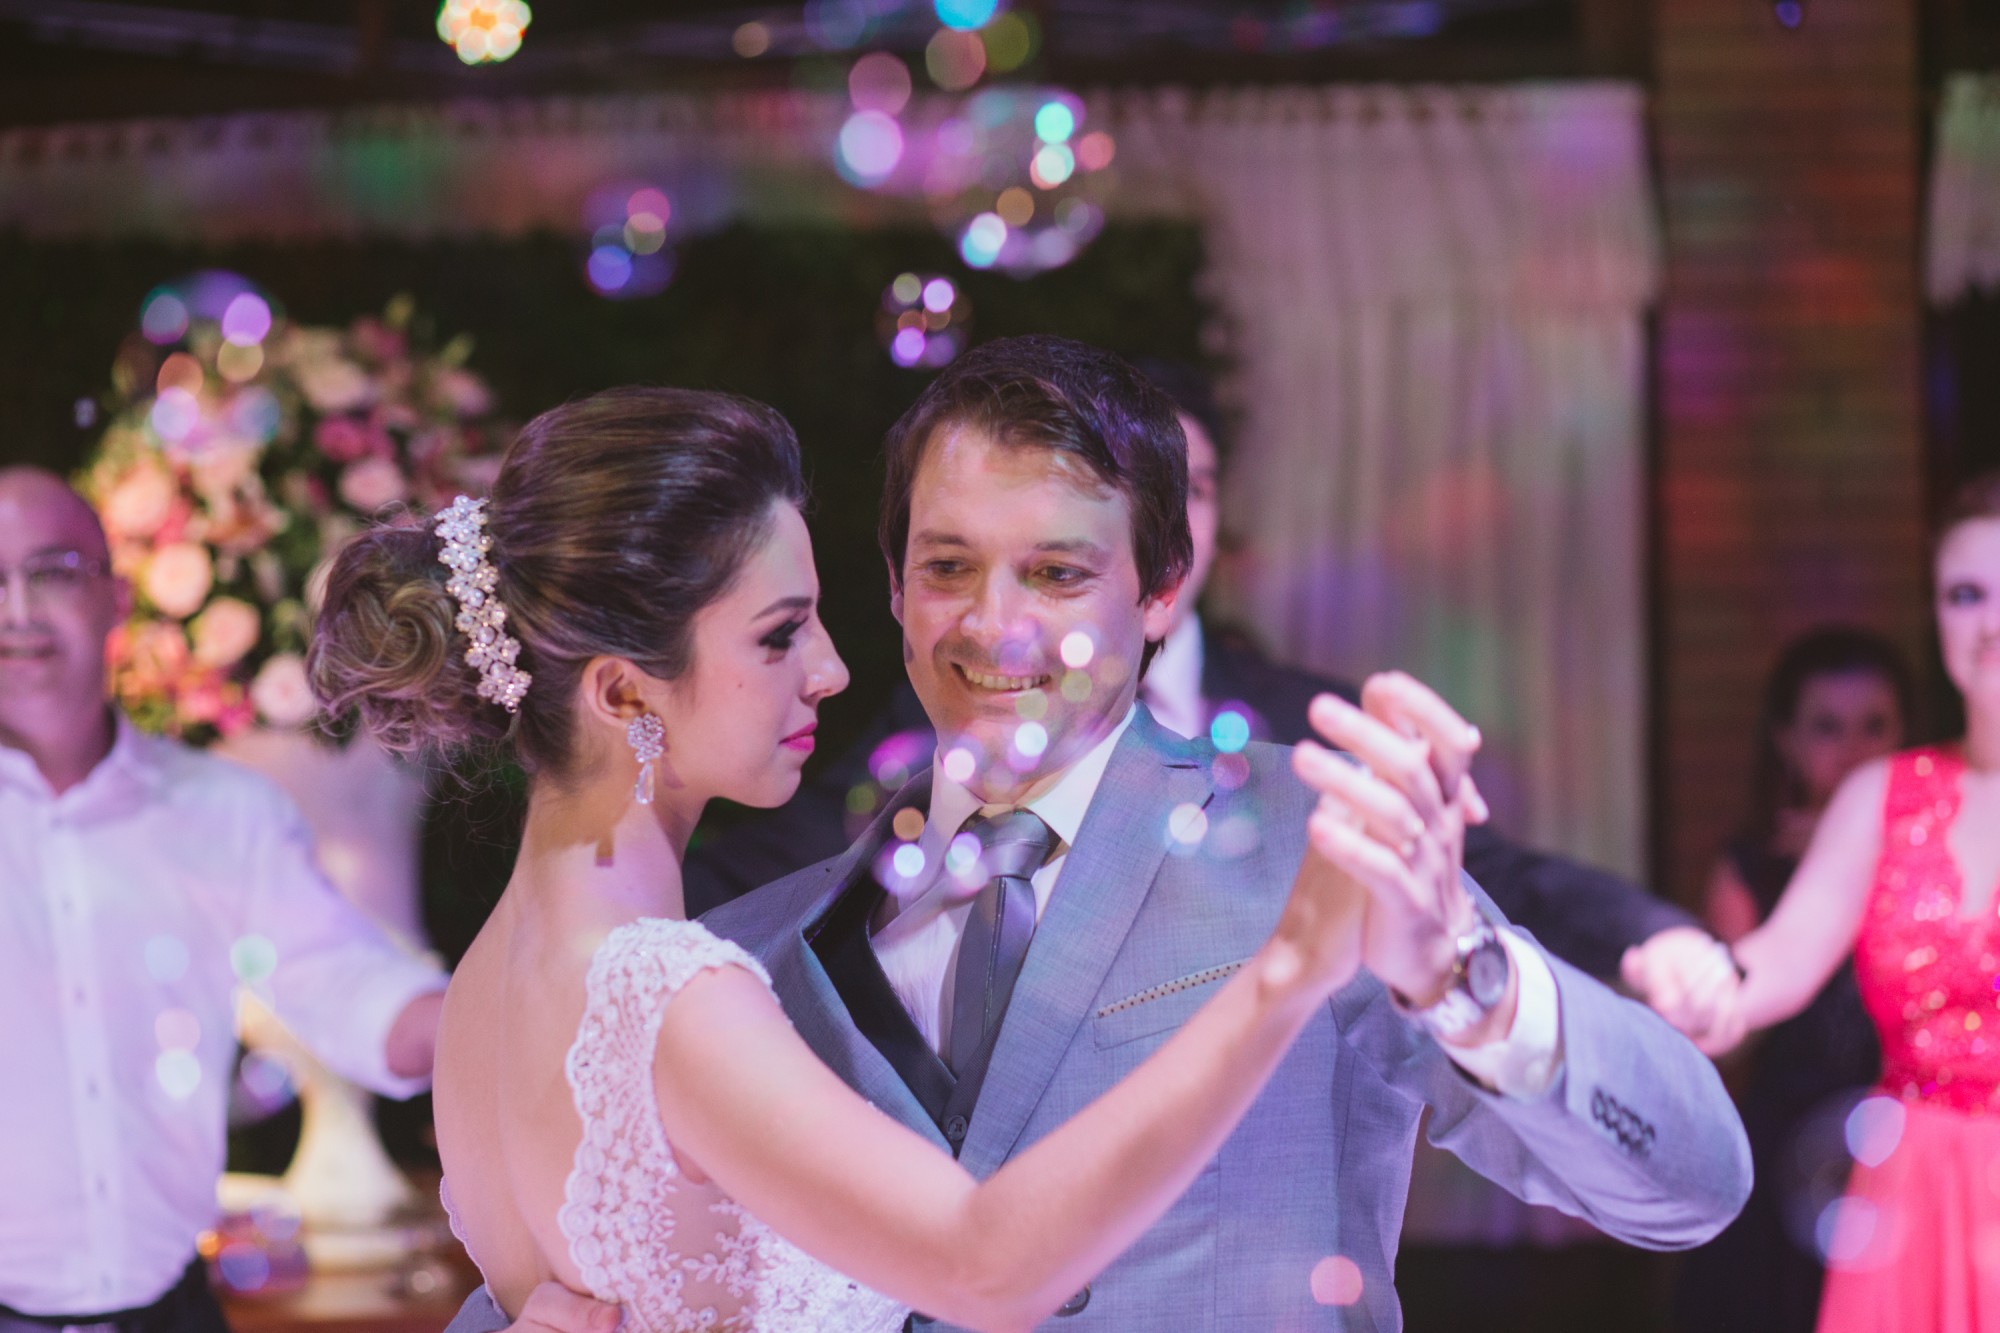 Maiara Kuki e Ricardo - Casamento em Palotina - PR por Lorran Souza e Léia Sotile - fotografo de casamentos00026